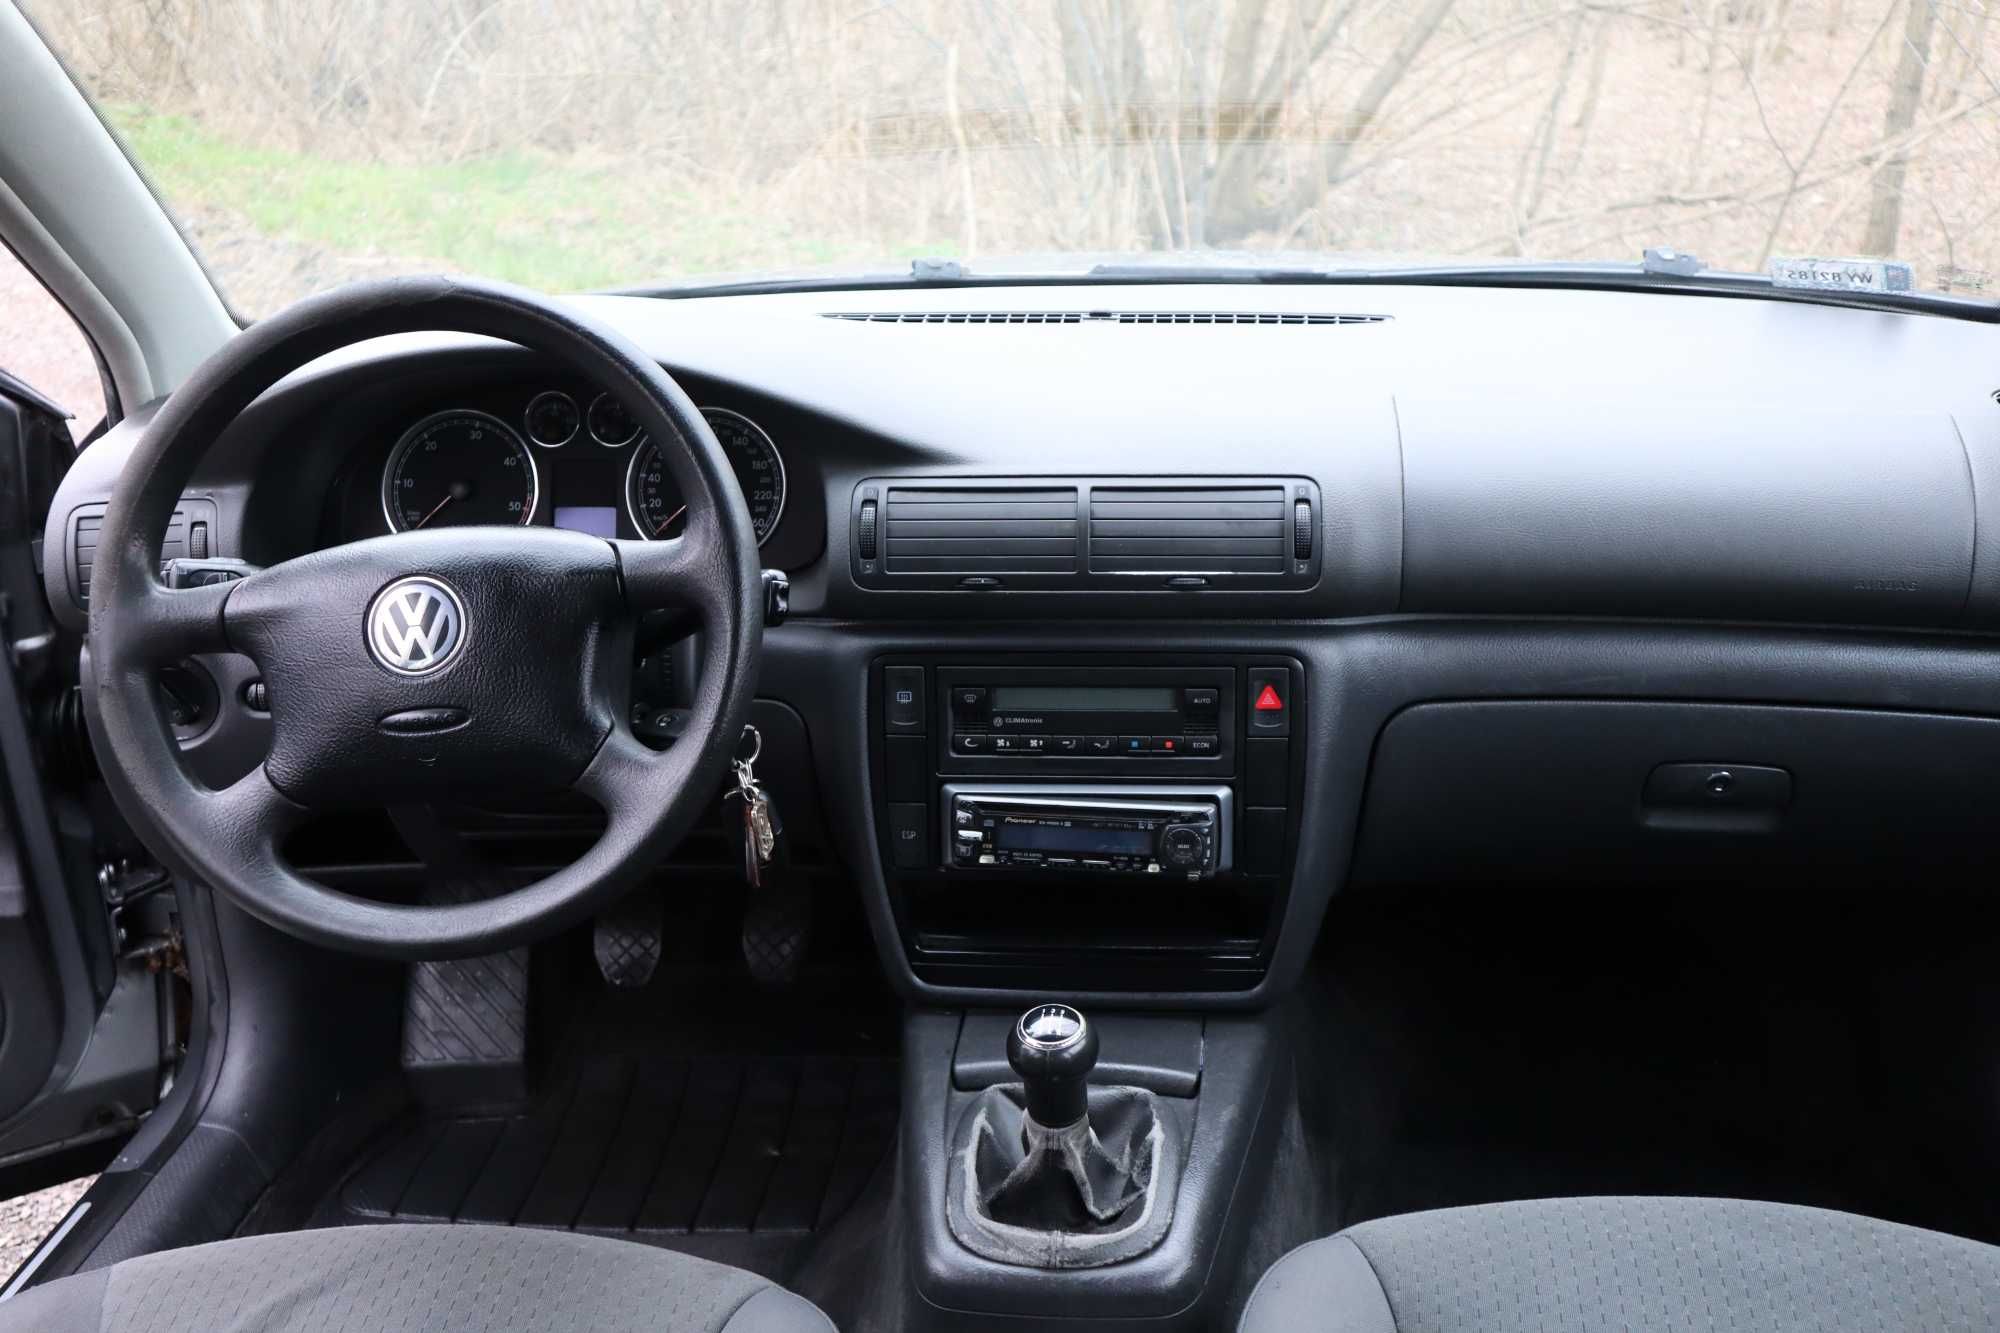 VW Passat 2004r. 1,9 Diesel - Możliwa Zamiana!